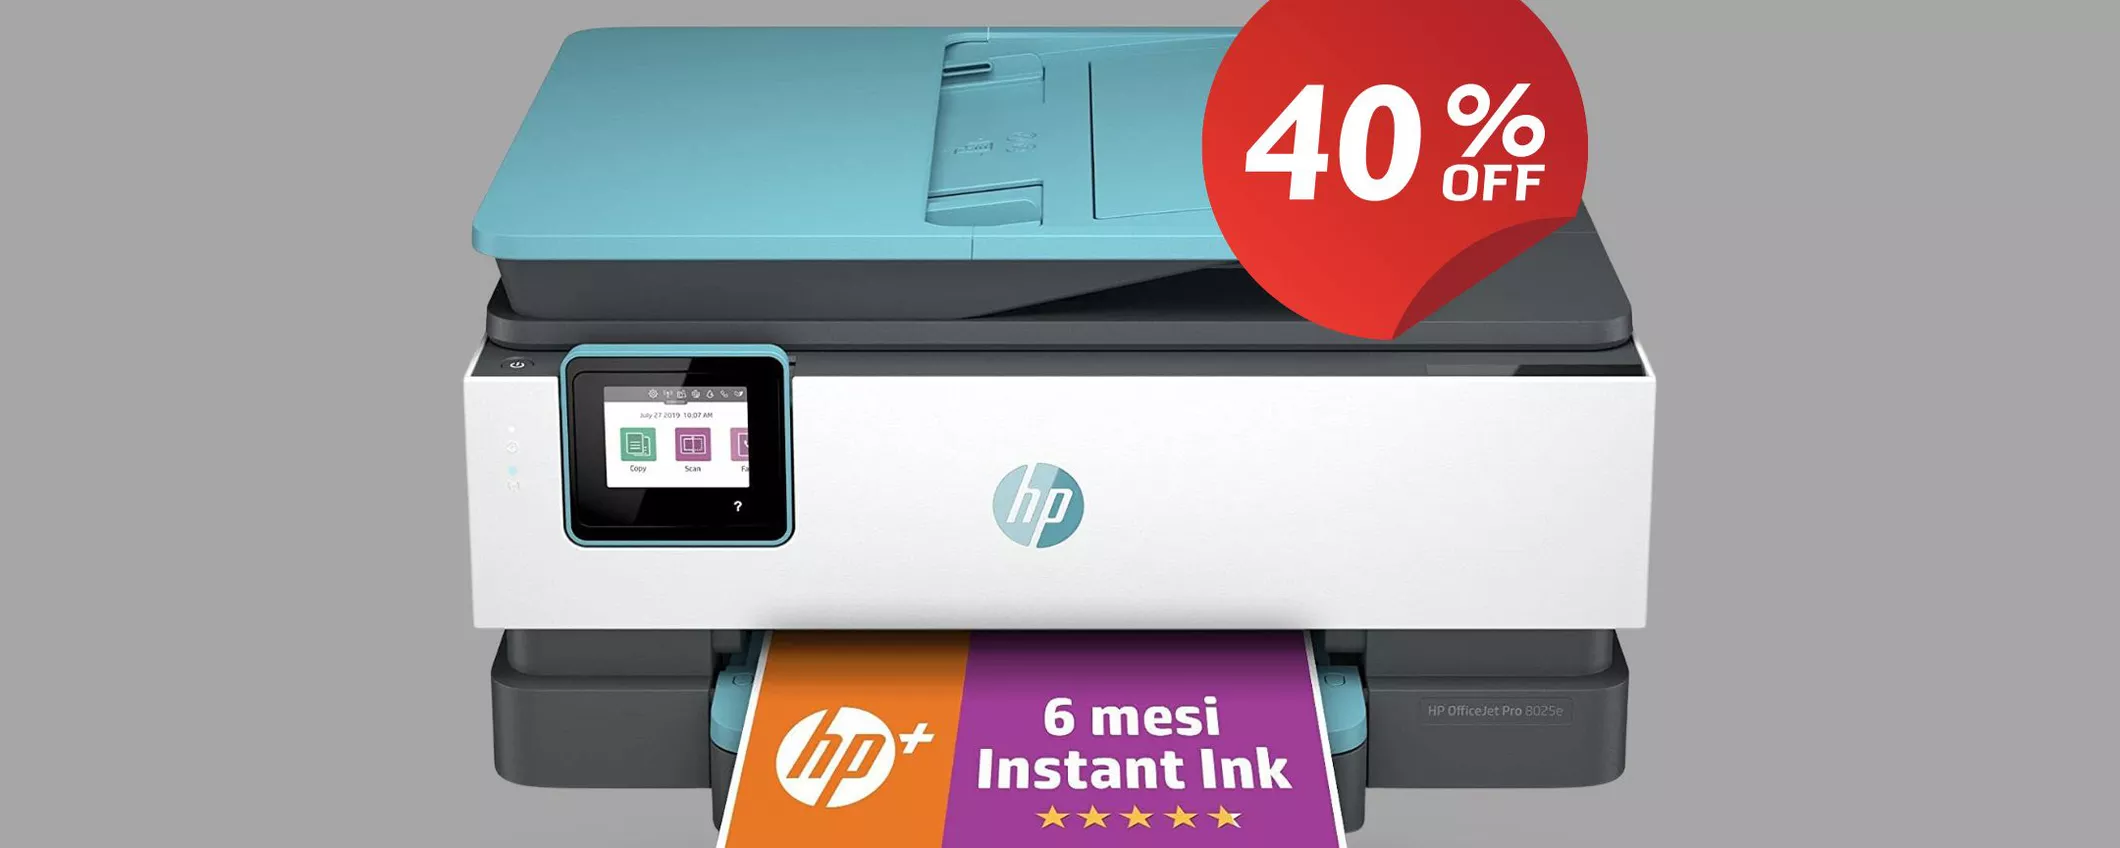 HP OfficeJet PRO: Stampa in maniera professionale al 41% in meno